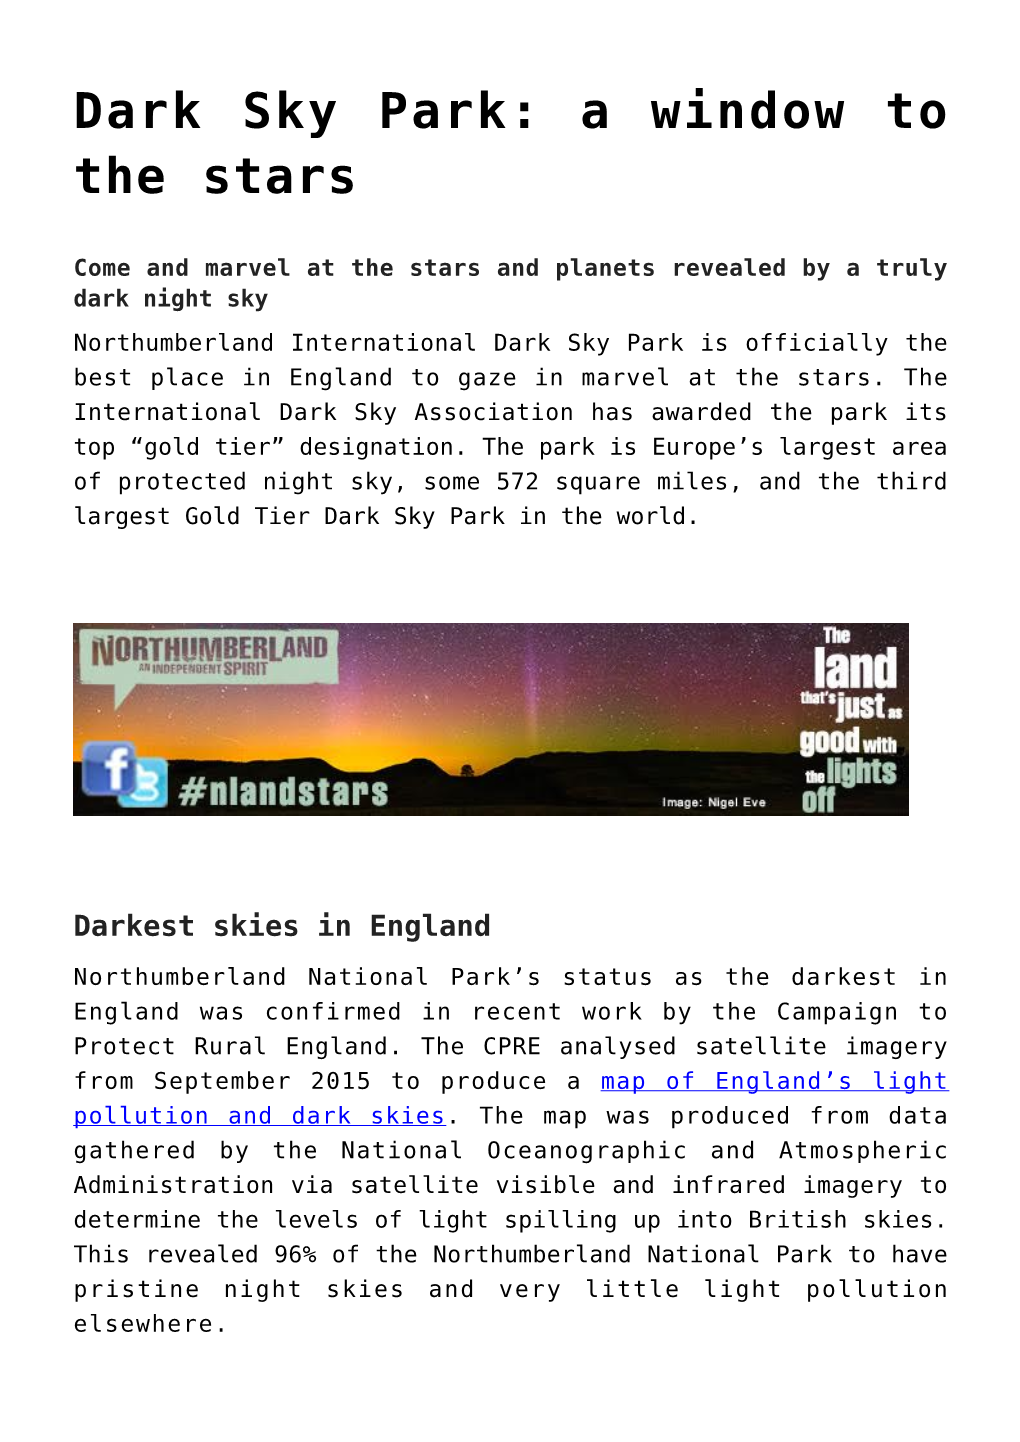 Dark Sky Park: a Window to the Stars